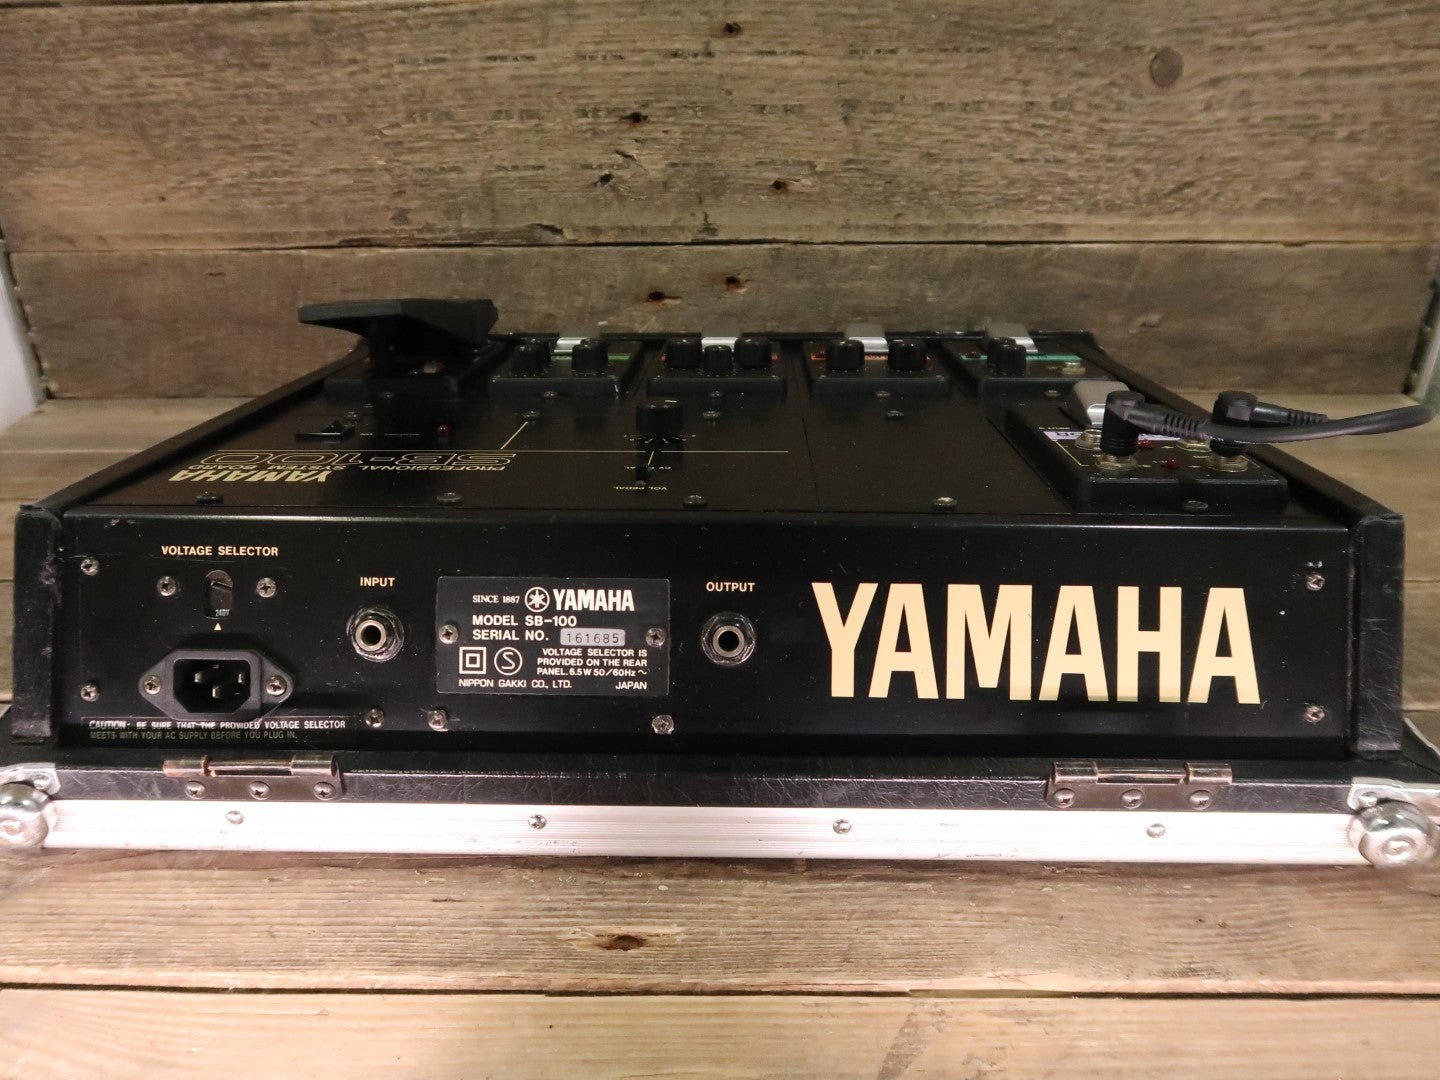 Yamaha SB-100 Professional System Board met pedalen (CH-01 Chorus, PH-01 Phaser, DI-01 Distortion, FL-01 Flanger, LS-01, MP-01)